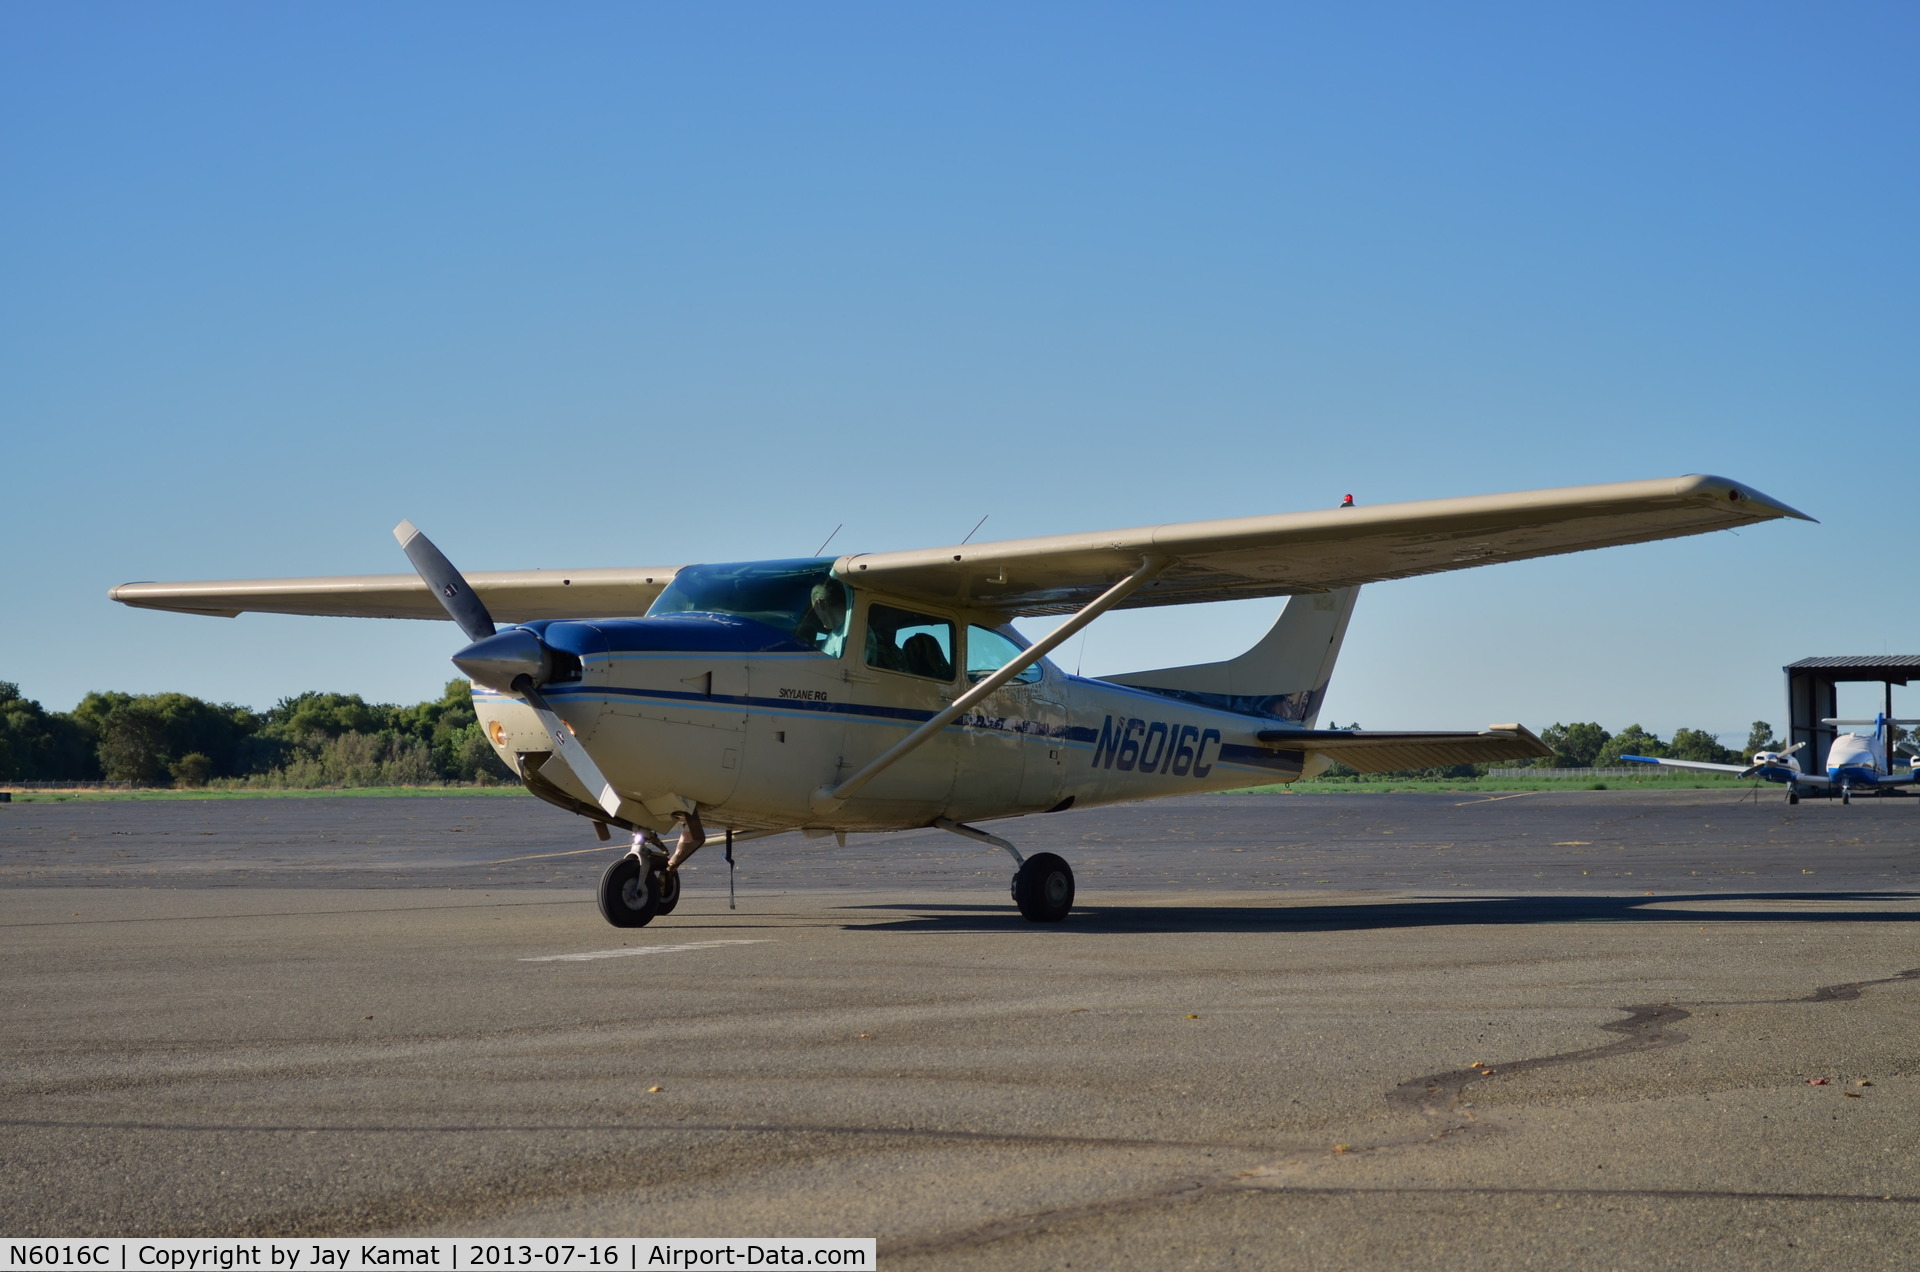 N6016C, 1978 Cessna R182 Skylane RG C/N R18200353, N6016c at the UC Davis Airport